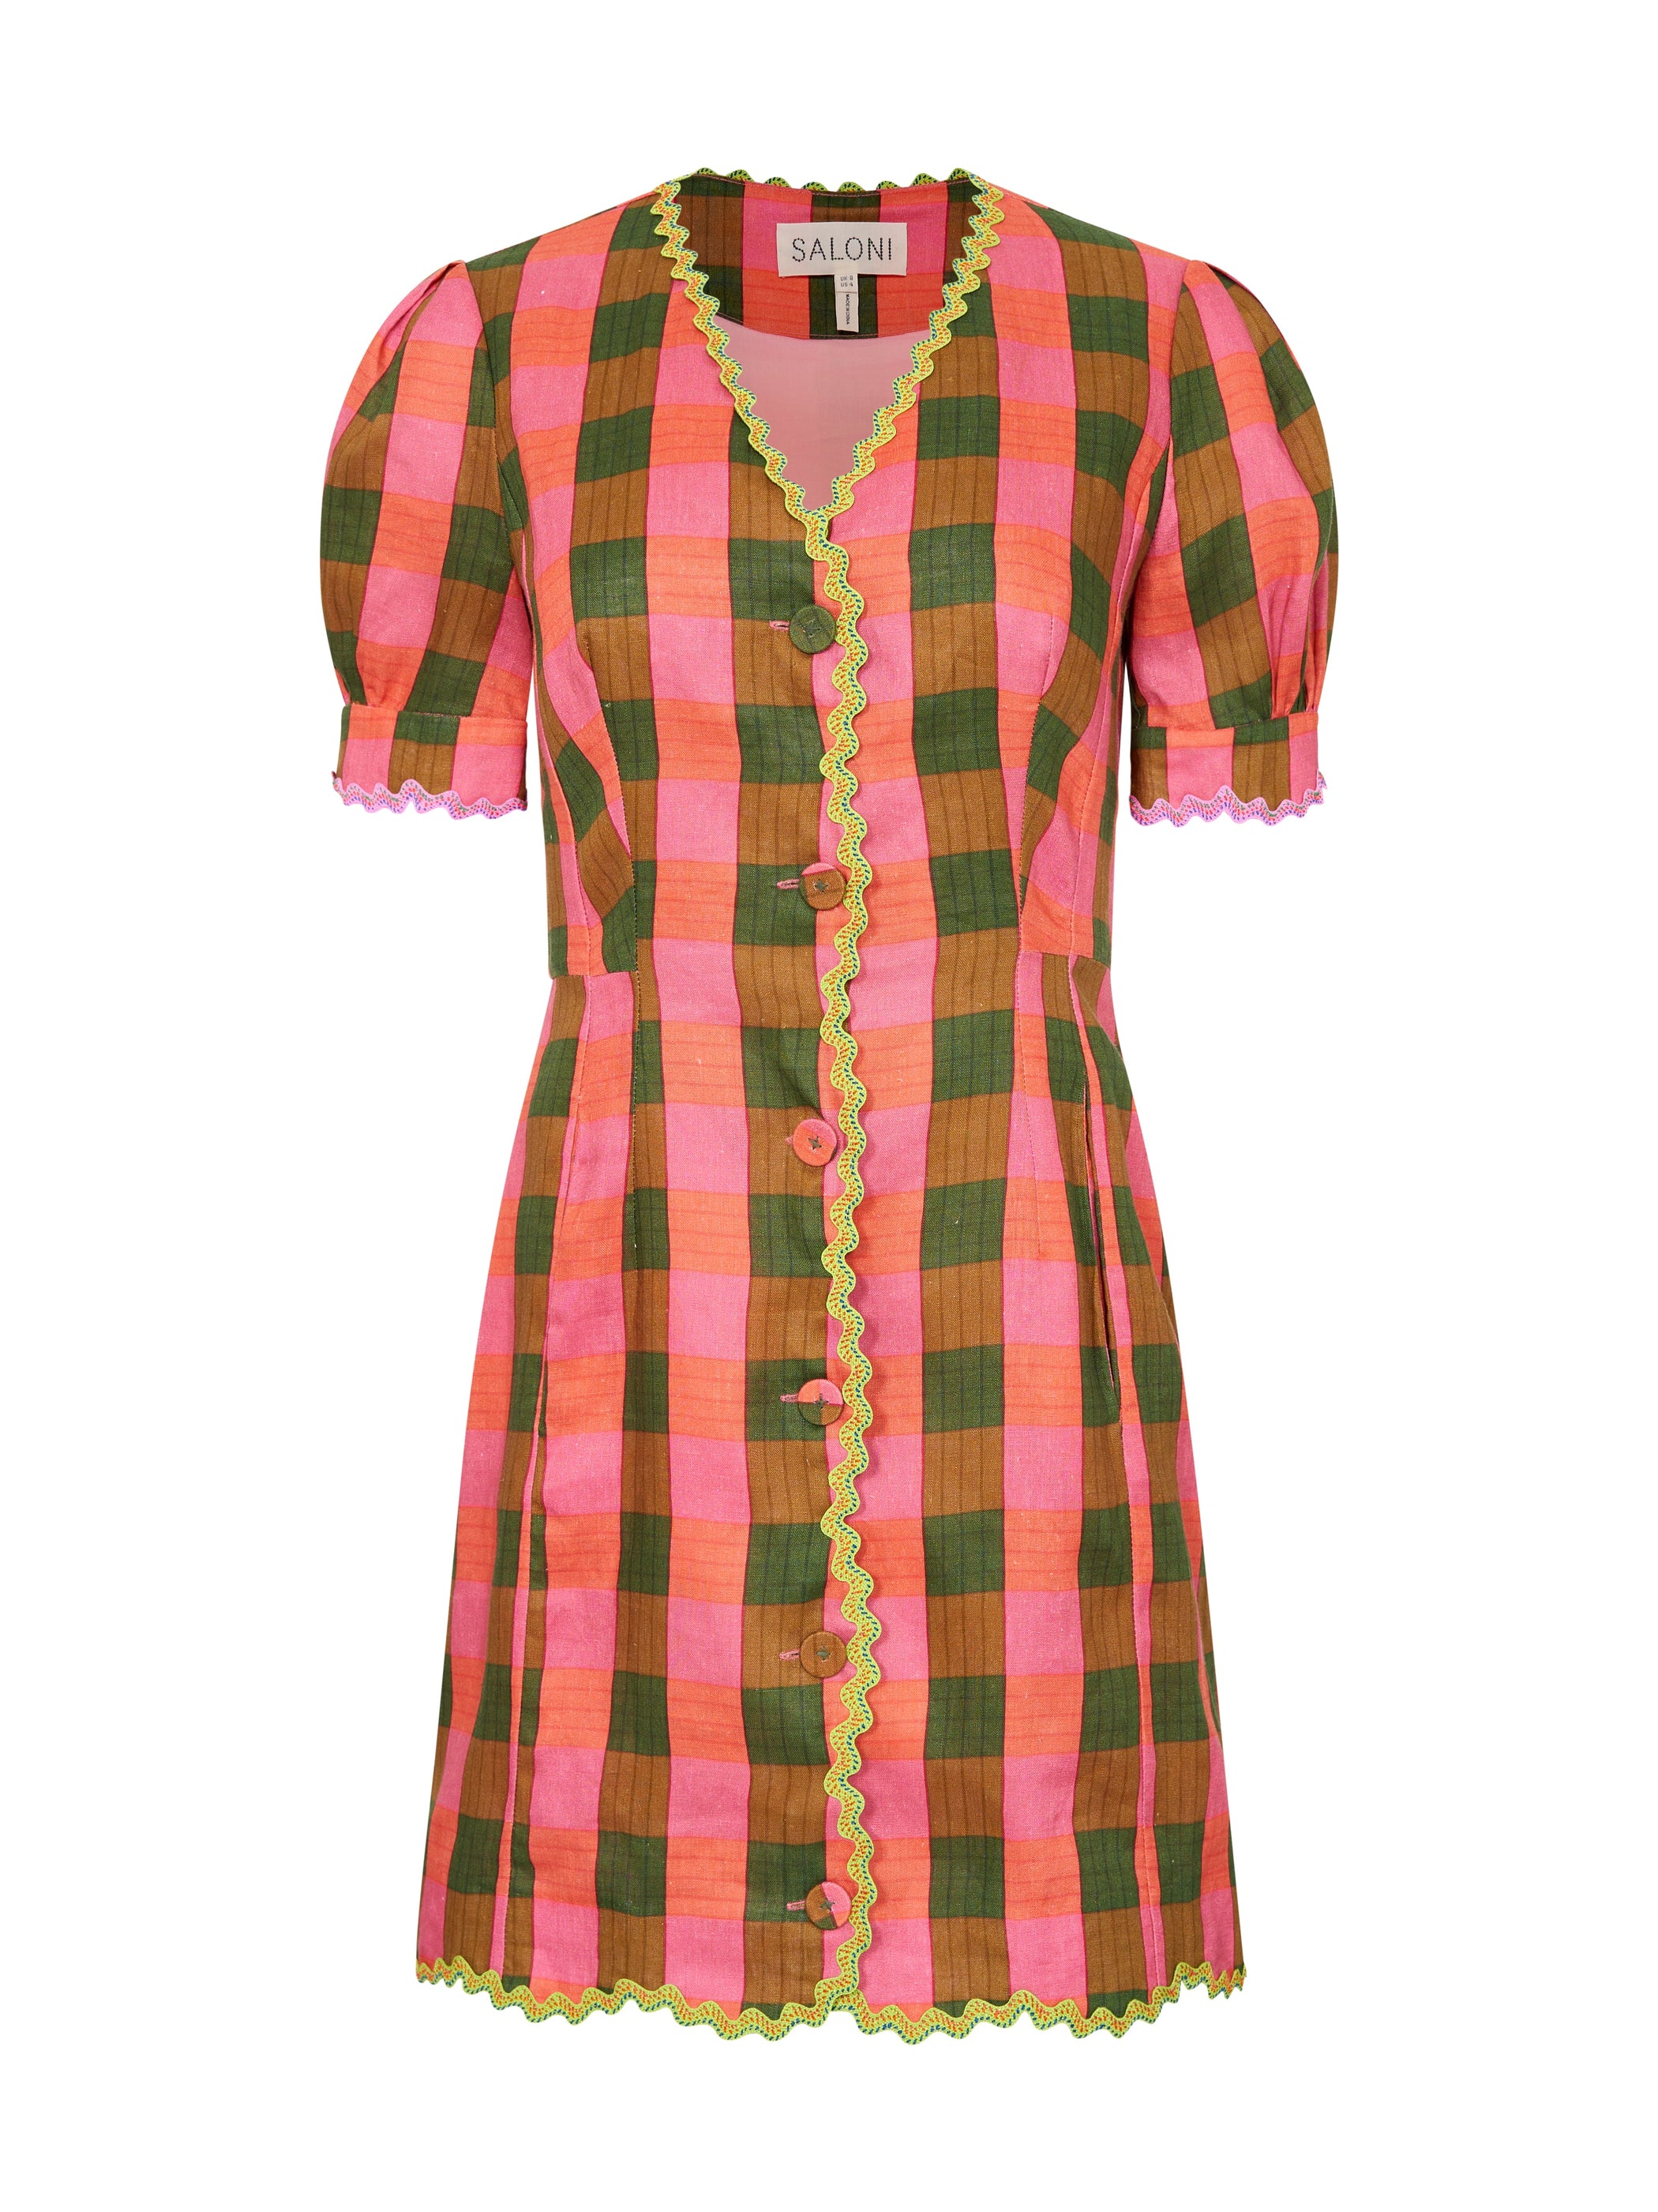 Marlee Dress in Banji Blush